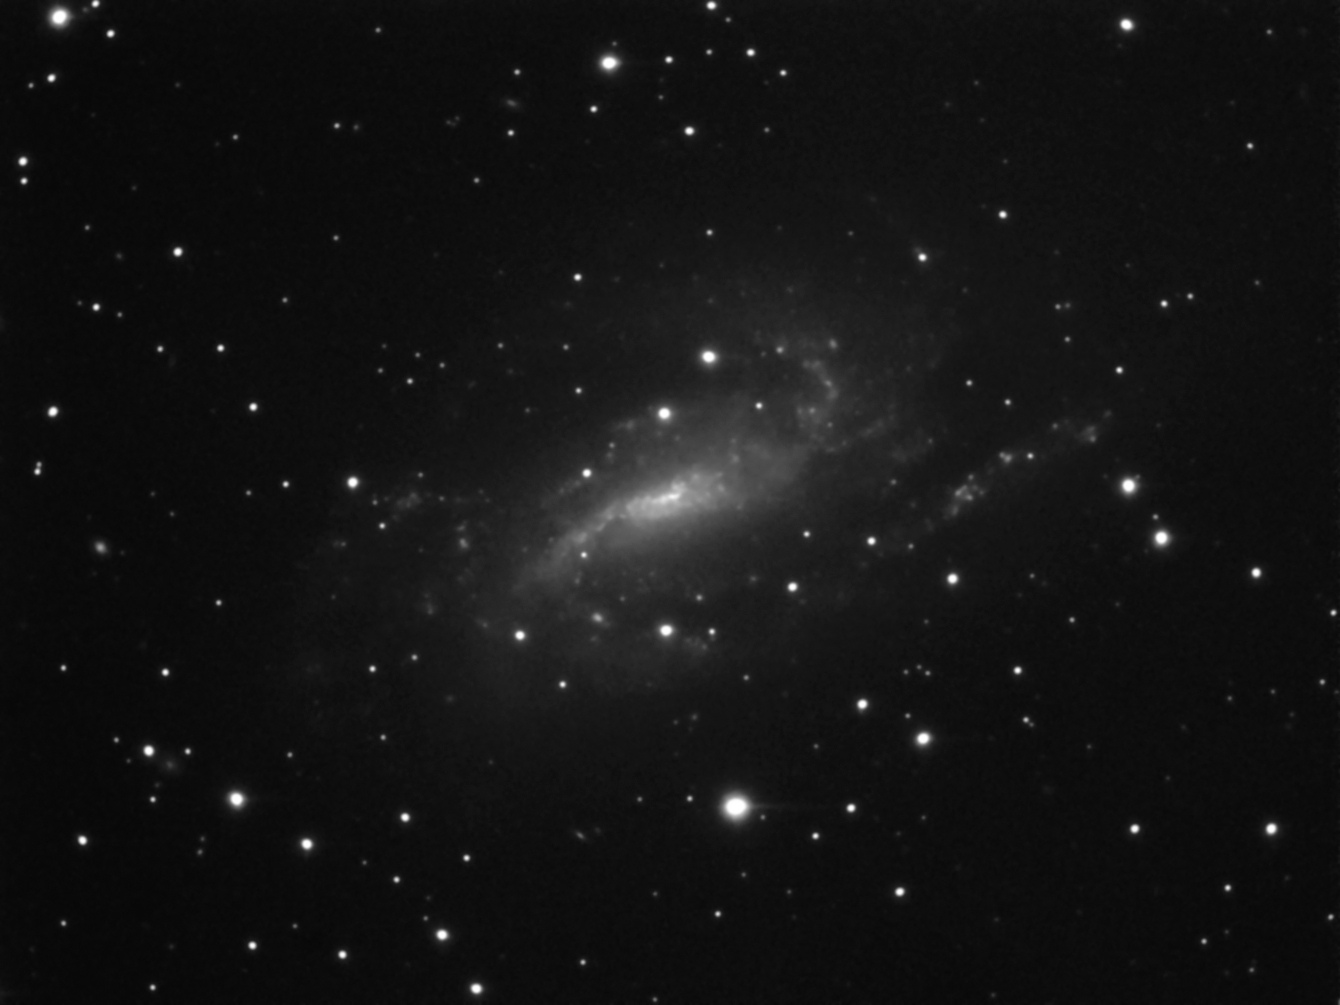 NGC925_Ladd19deconv3visulogddppspFDC0psp.jpg.ab0cdb54c9b889f085c1be7ef190a8fa.jpg